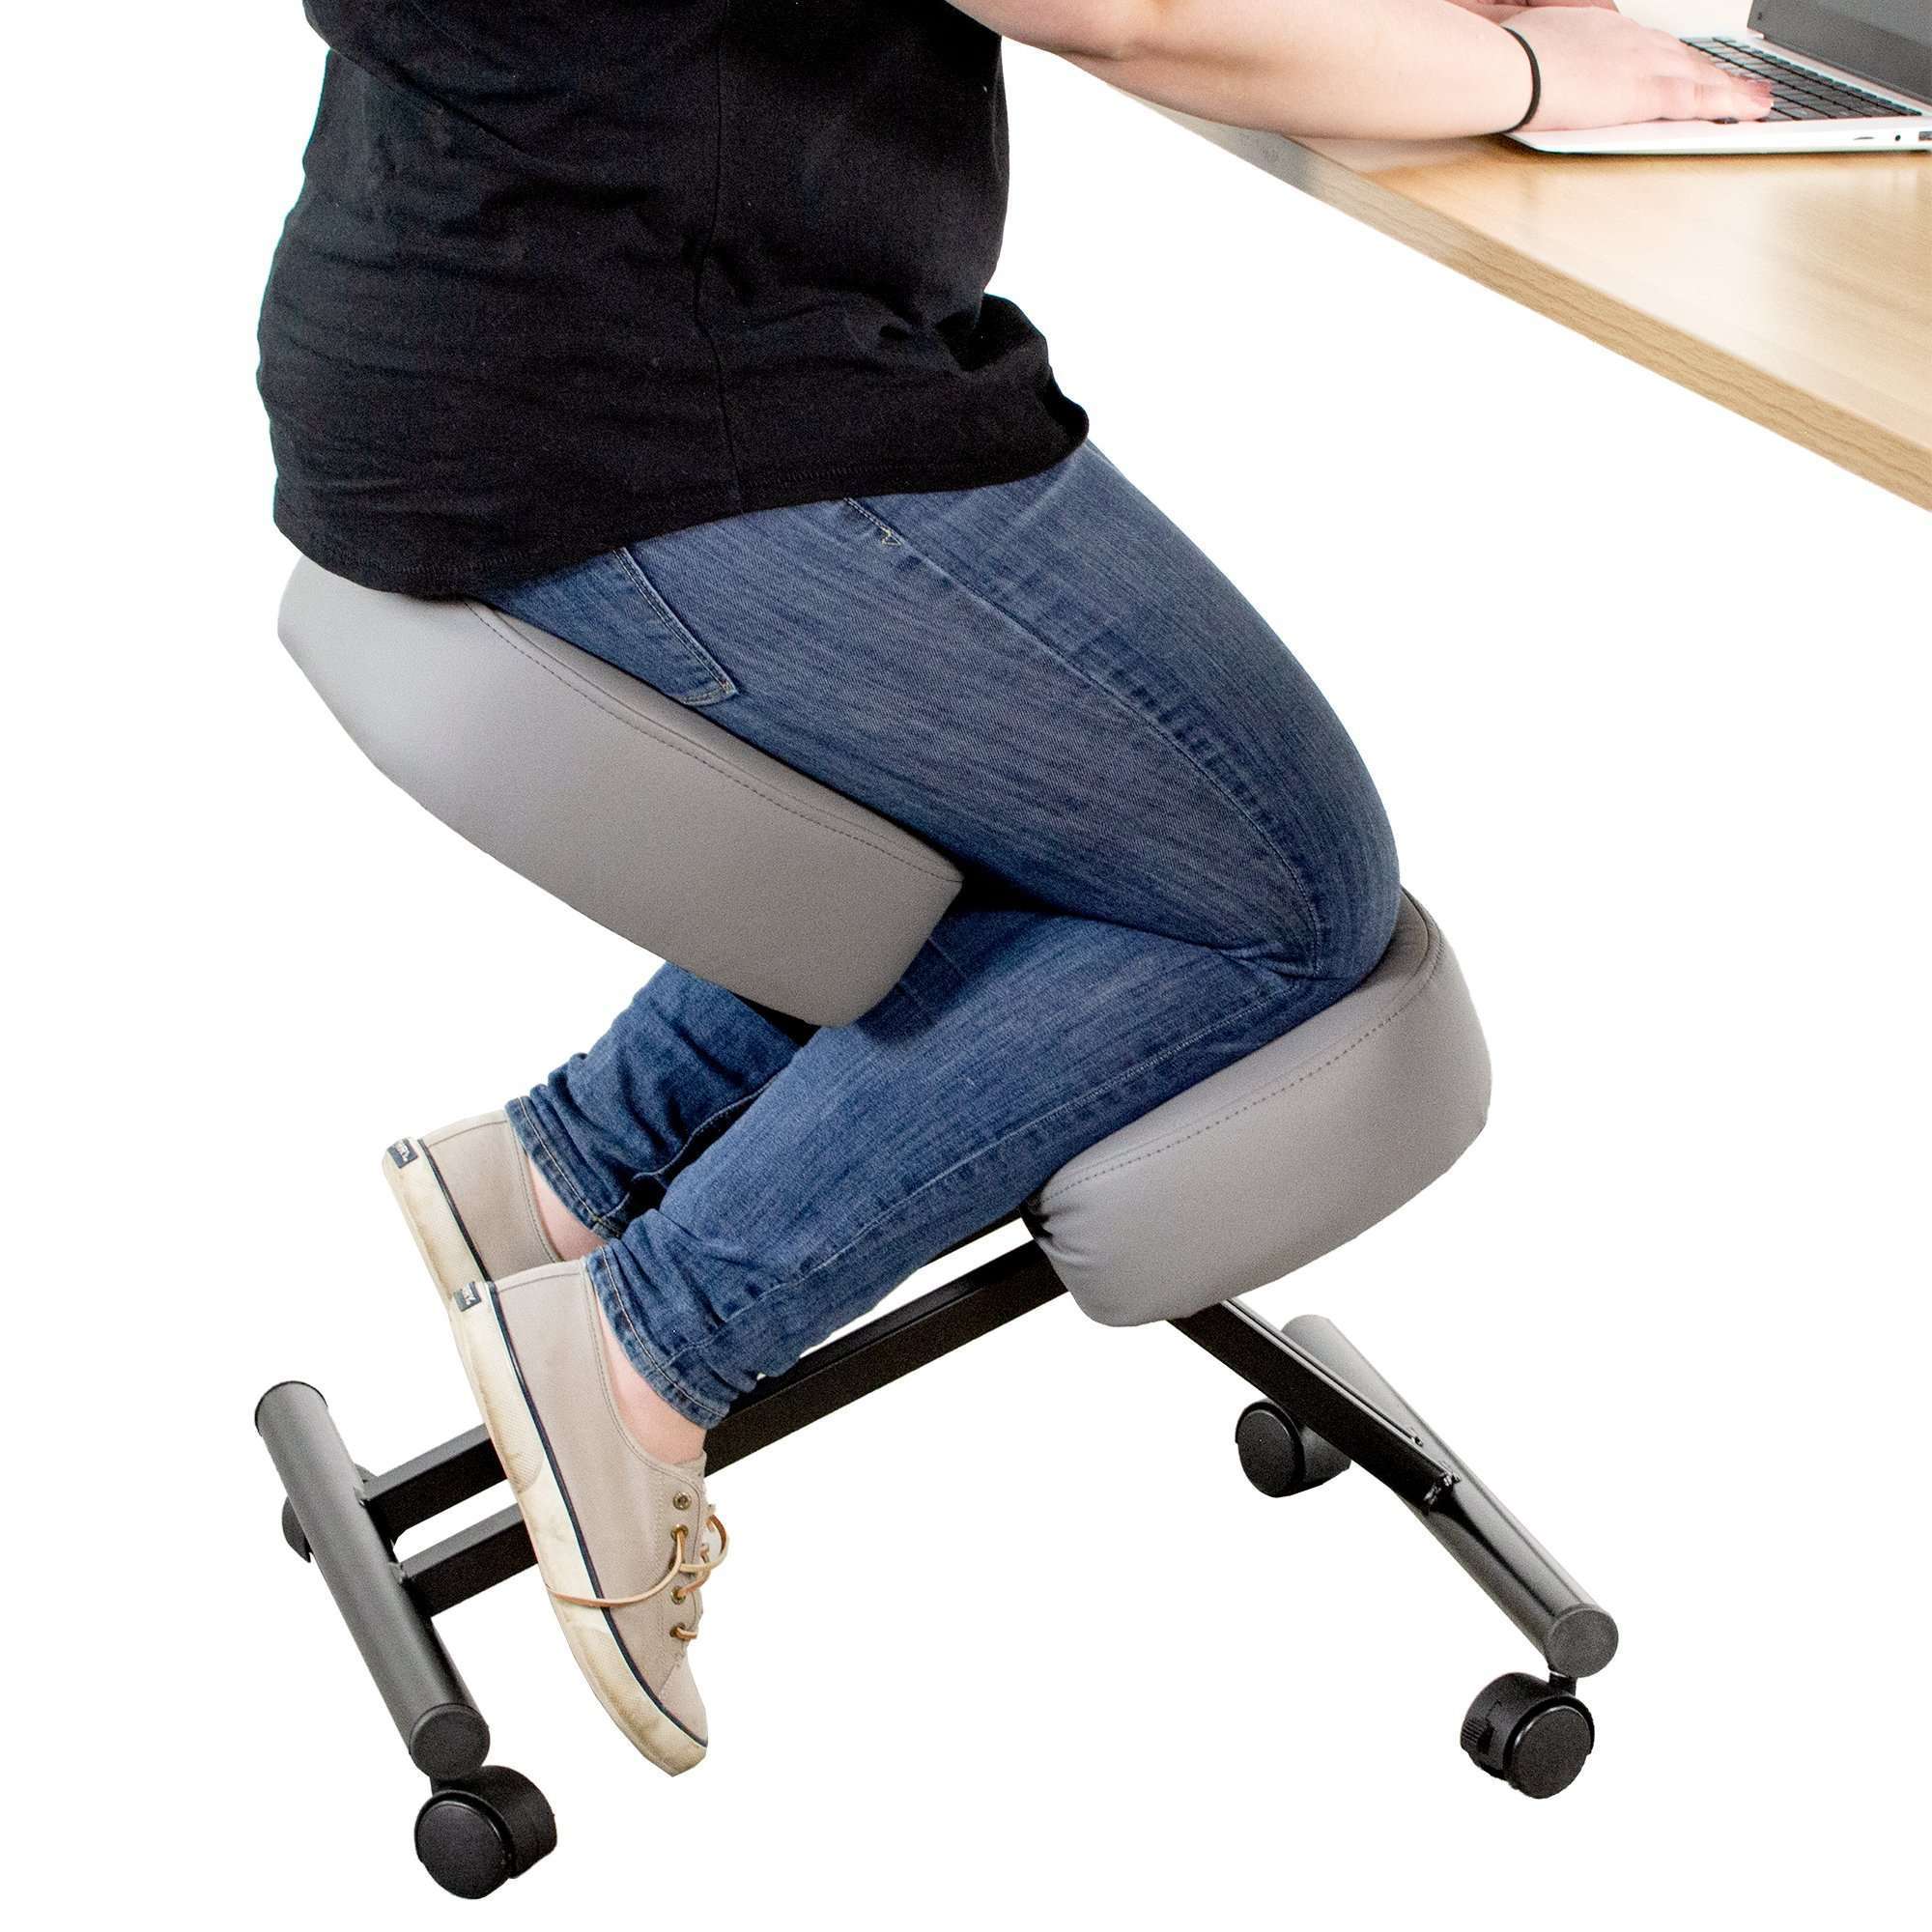 DRAGONN (By VIVO) Ergonomic Kneeling Chair with Back Support, Black